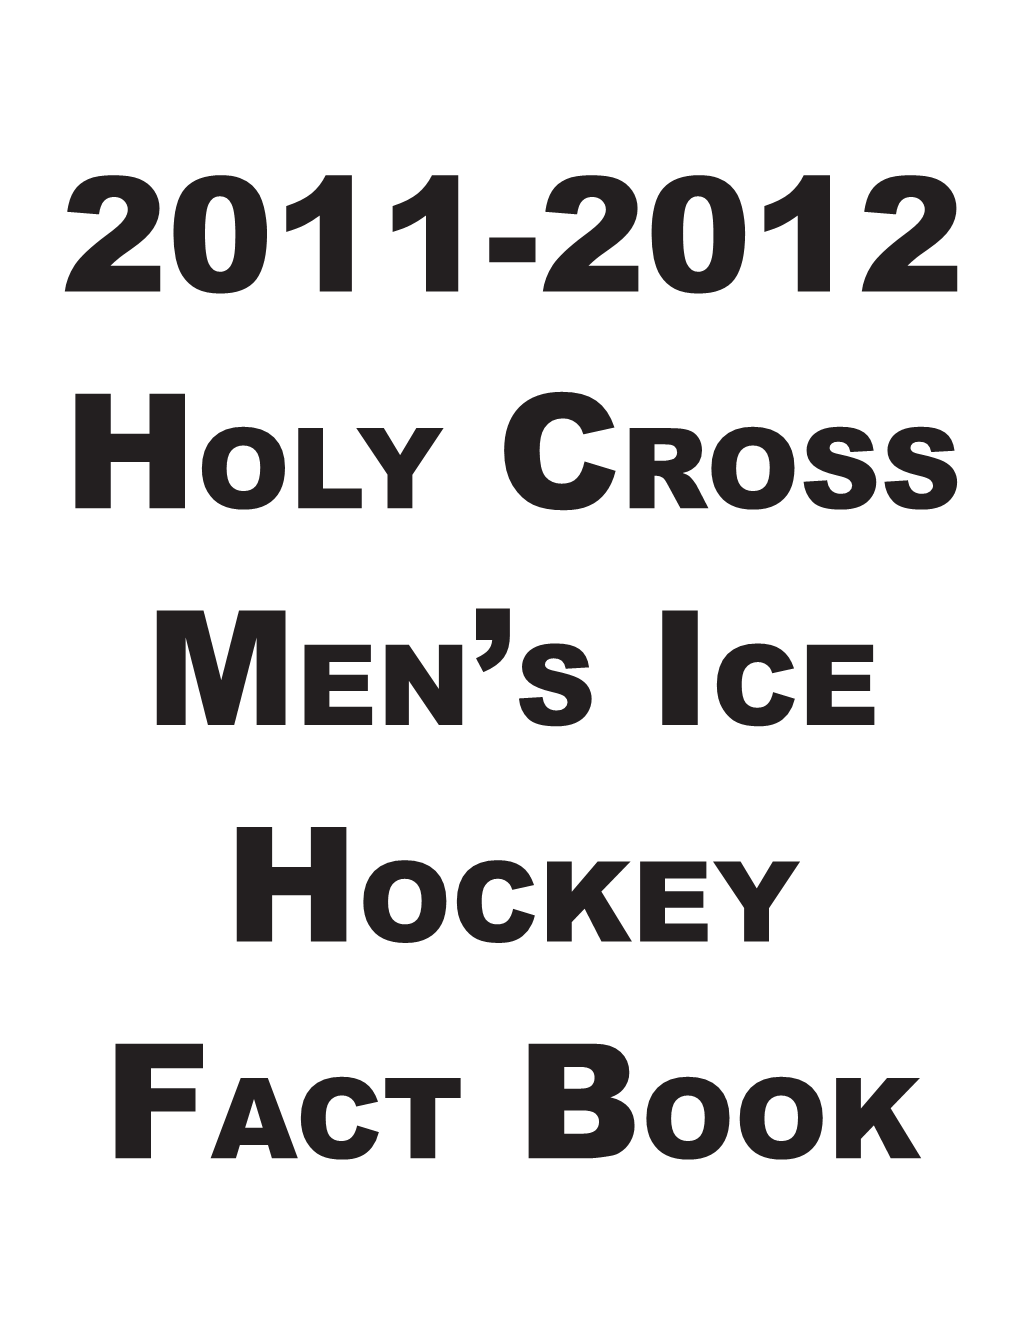 2011-2012 Hockey Fact Book.Indd